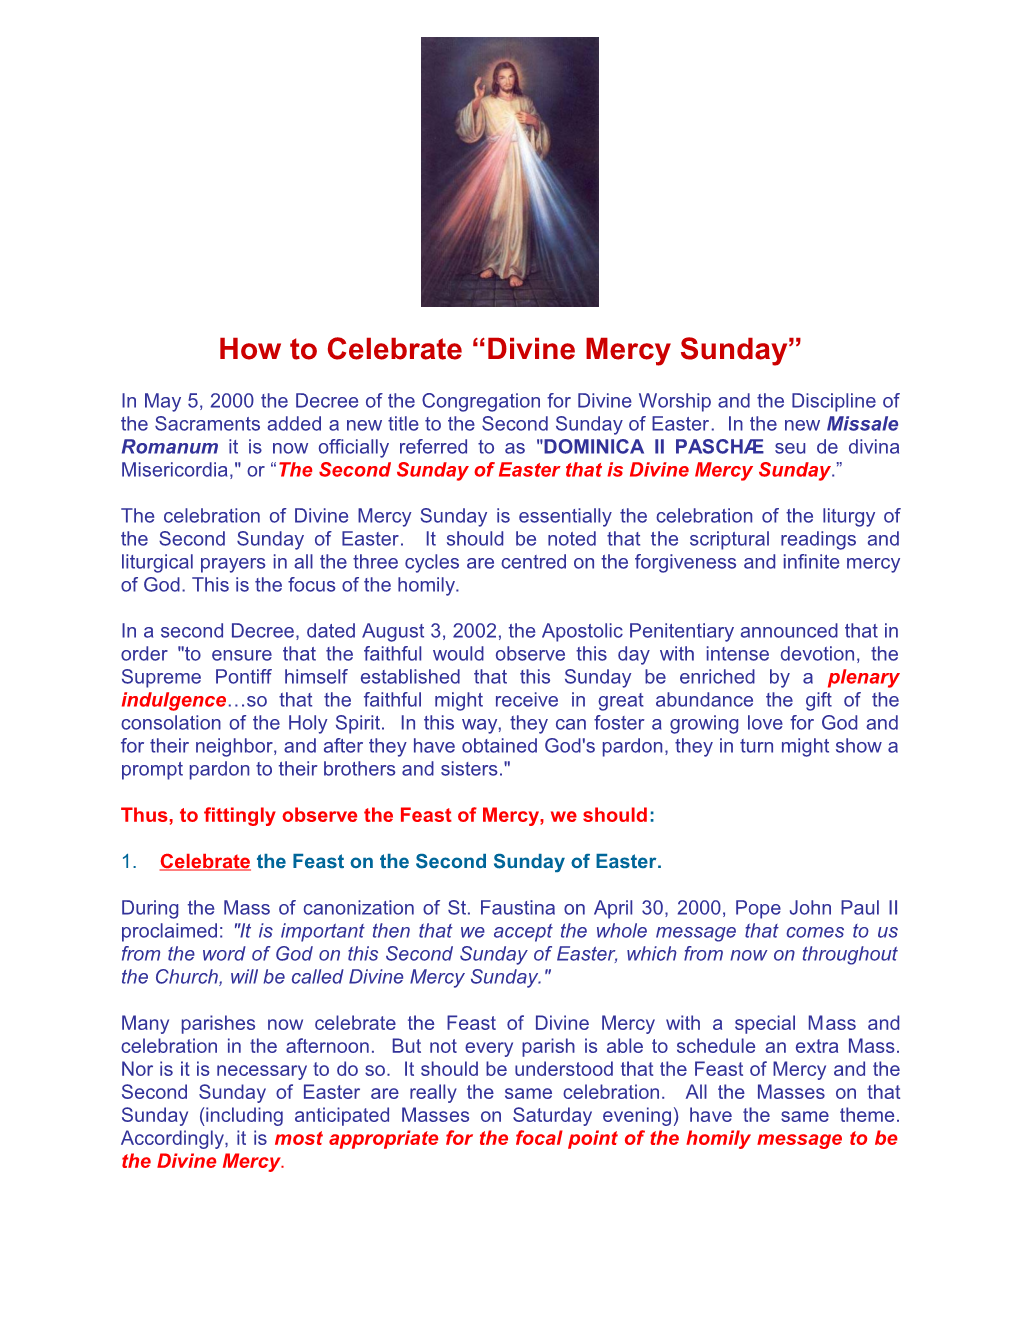 How to Celebrate Divine Mercy Sunday